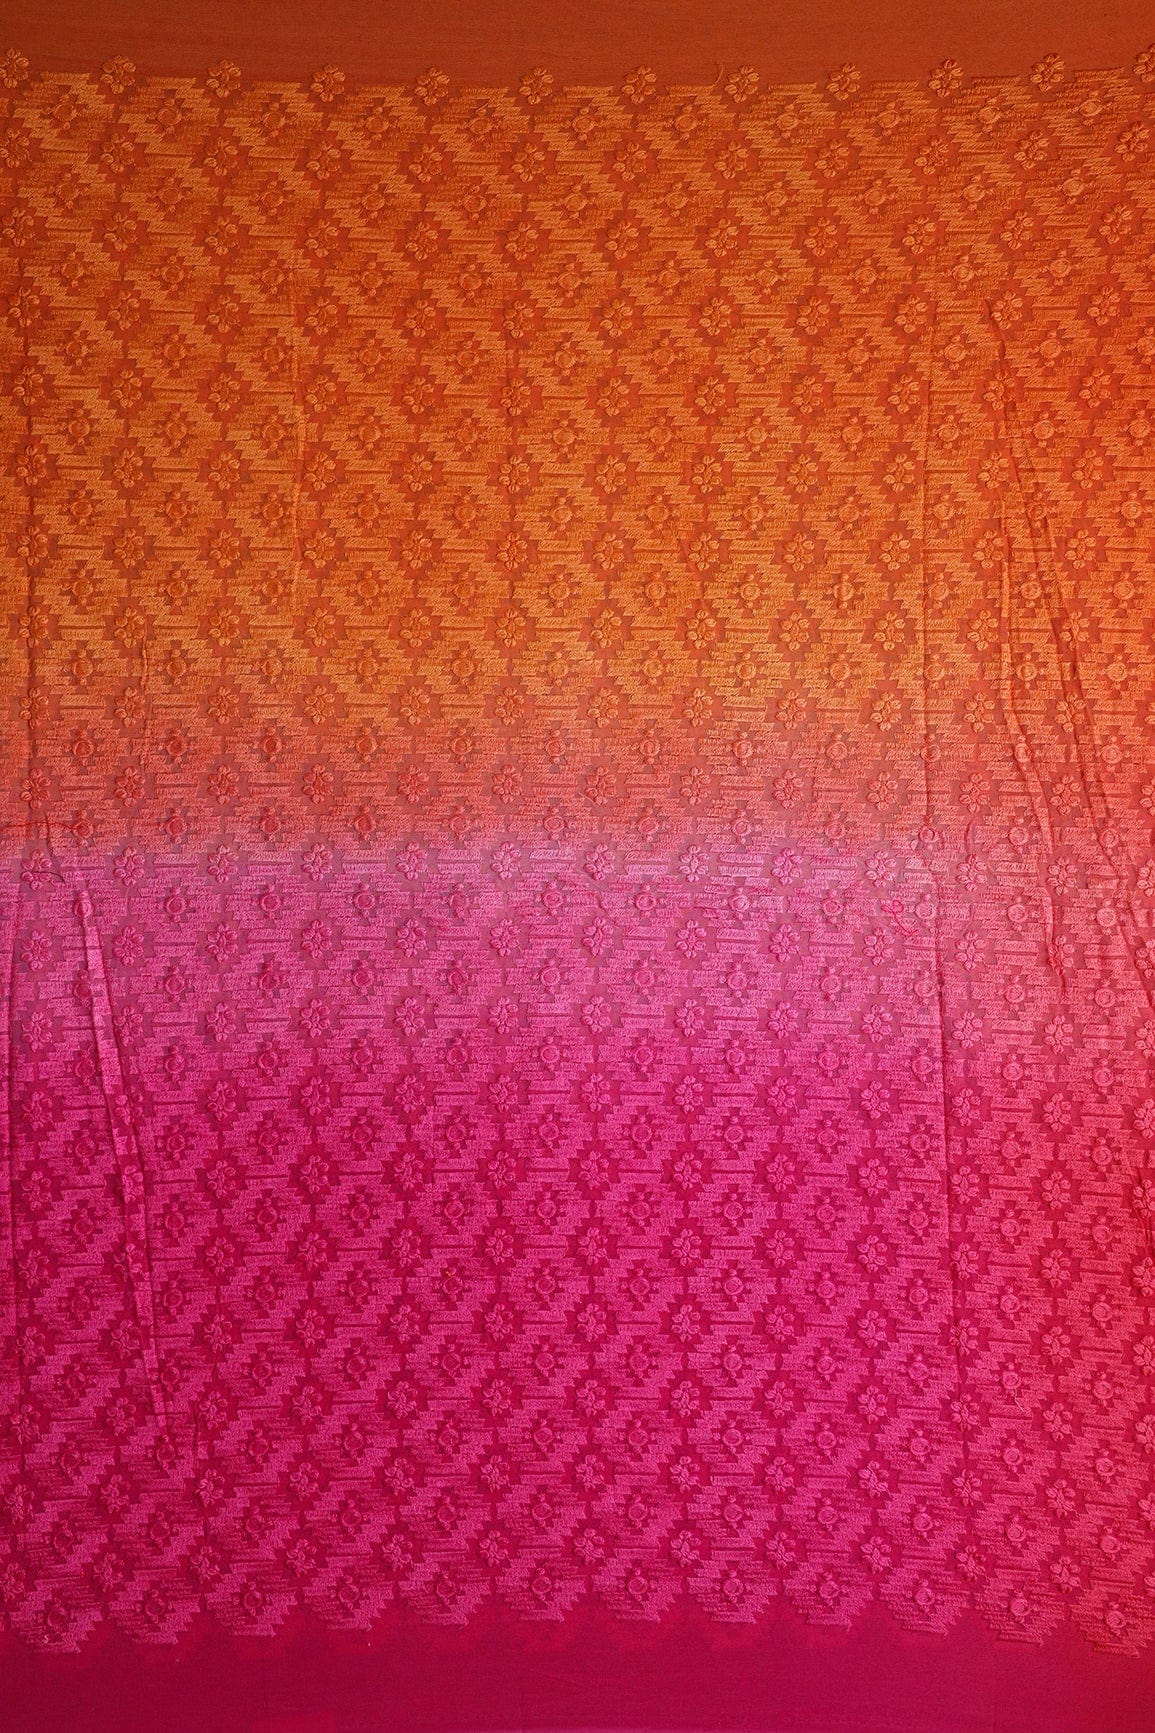 doeraa Embroidery Fabrics 2 Meter Cut Piece Of Multi Thread Floral Embroidery On Multi Color Viscose Georgette Fabric